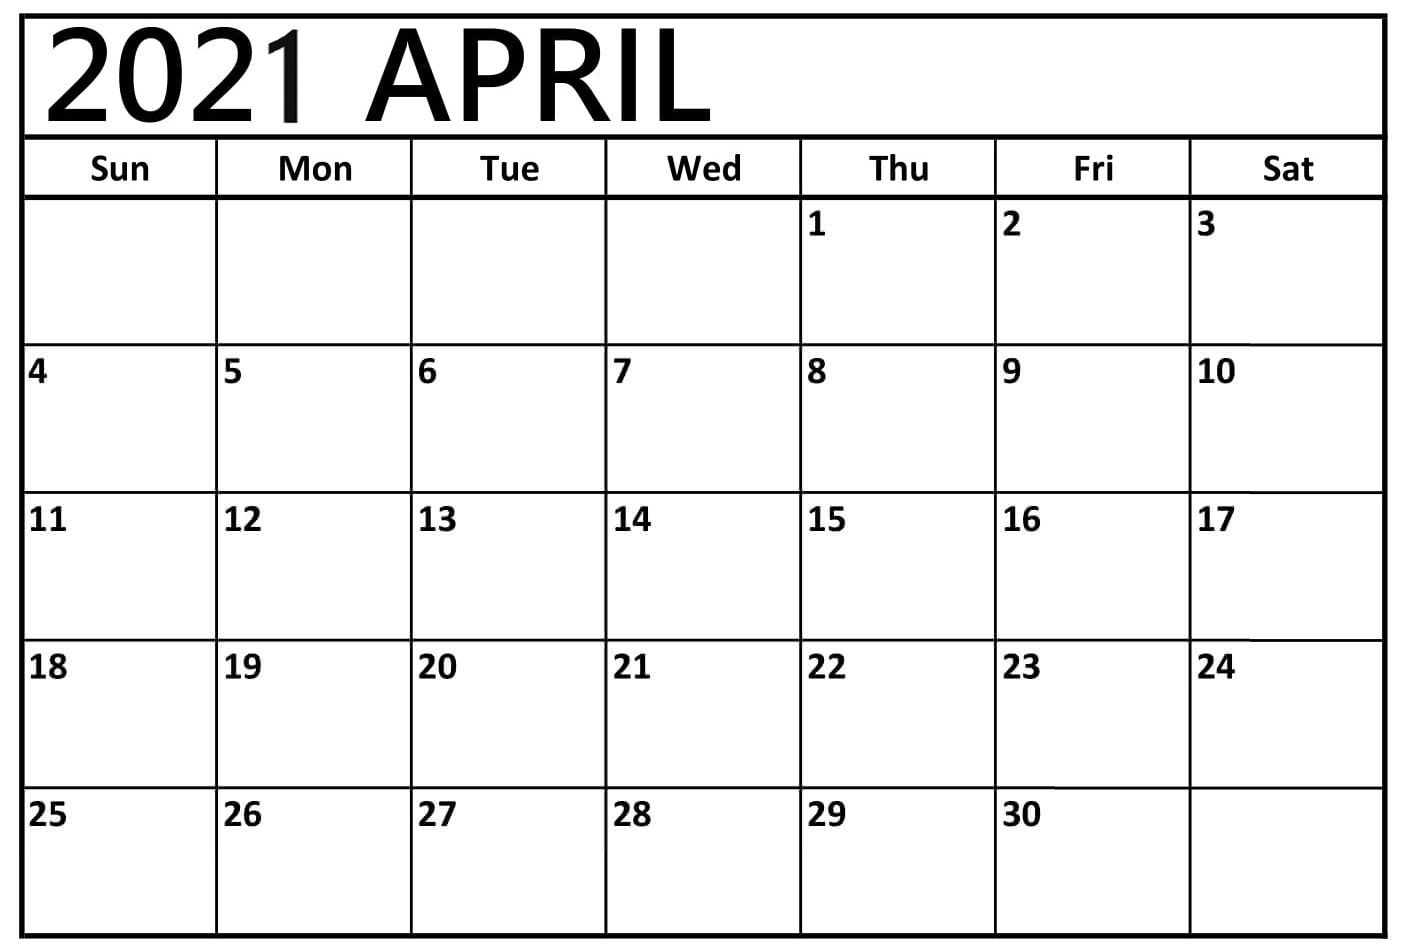 April 2021 Calendar Nz Templates With Holidays - One